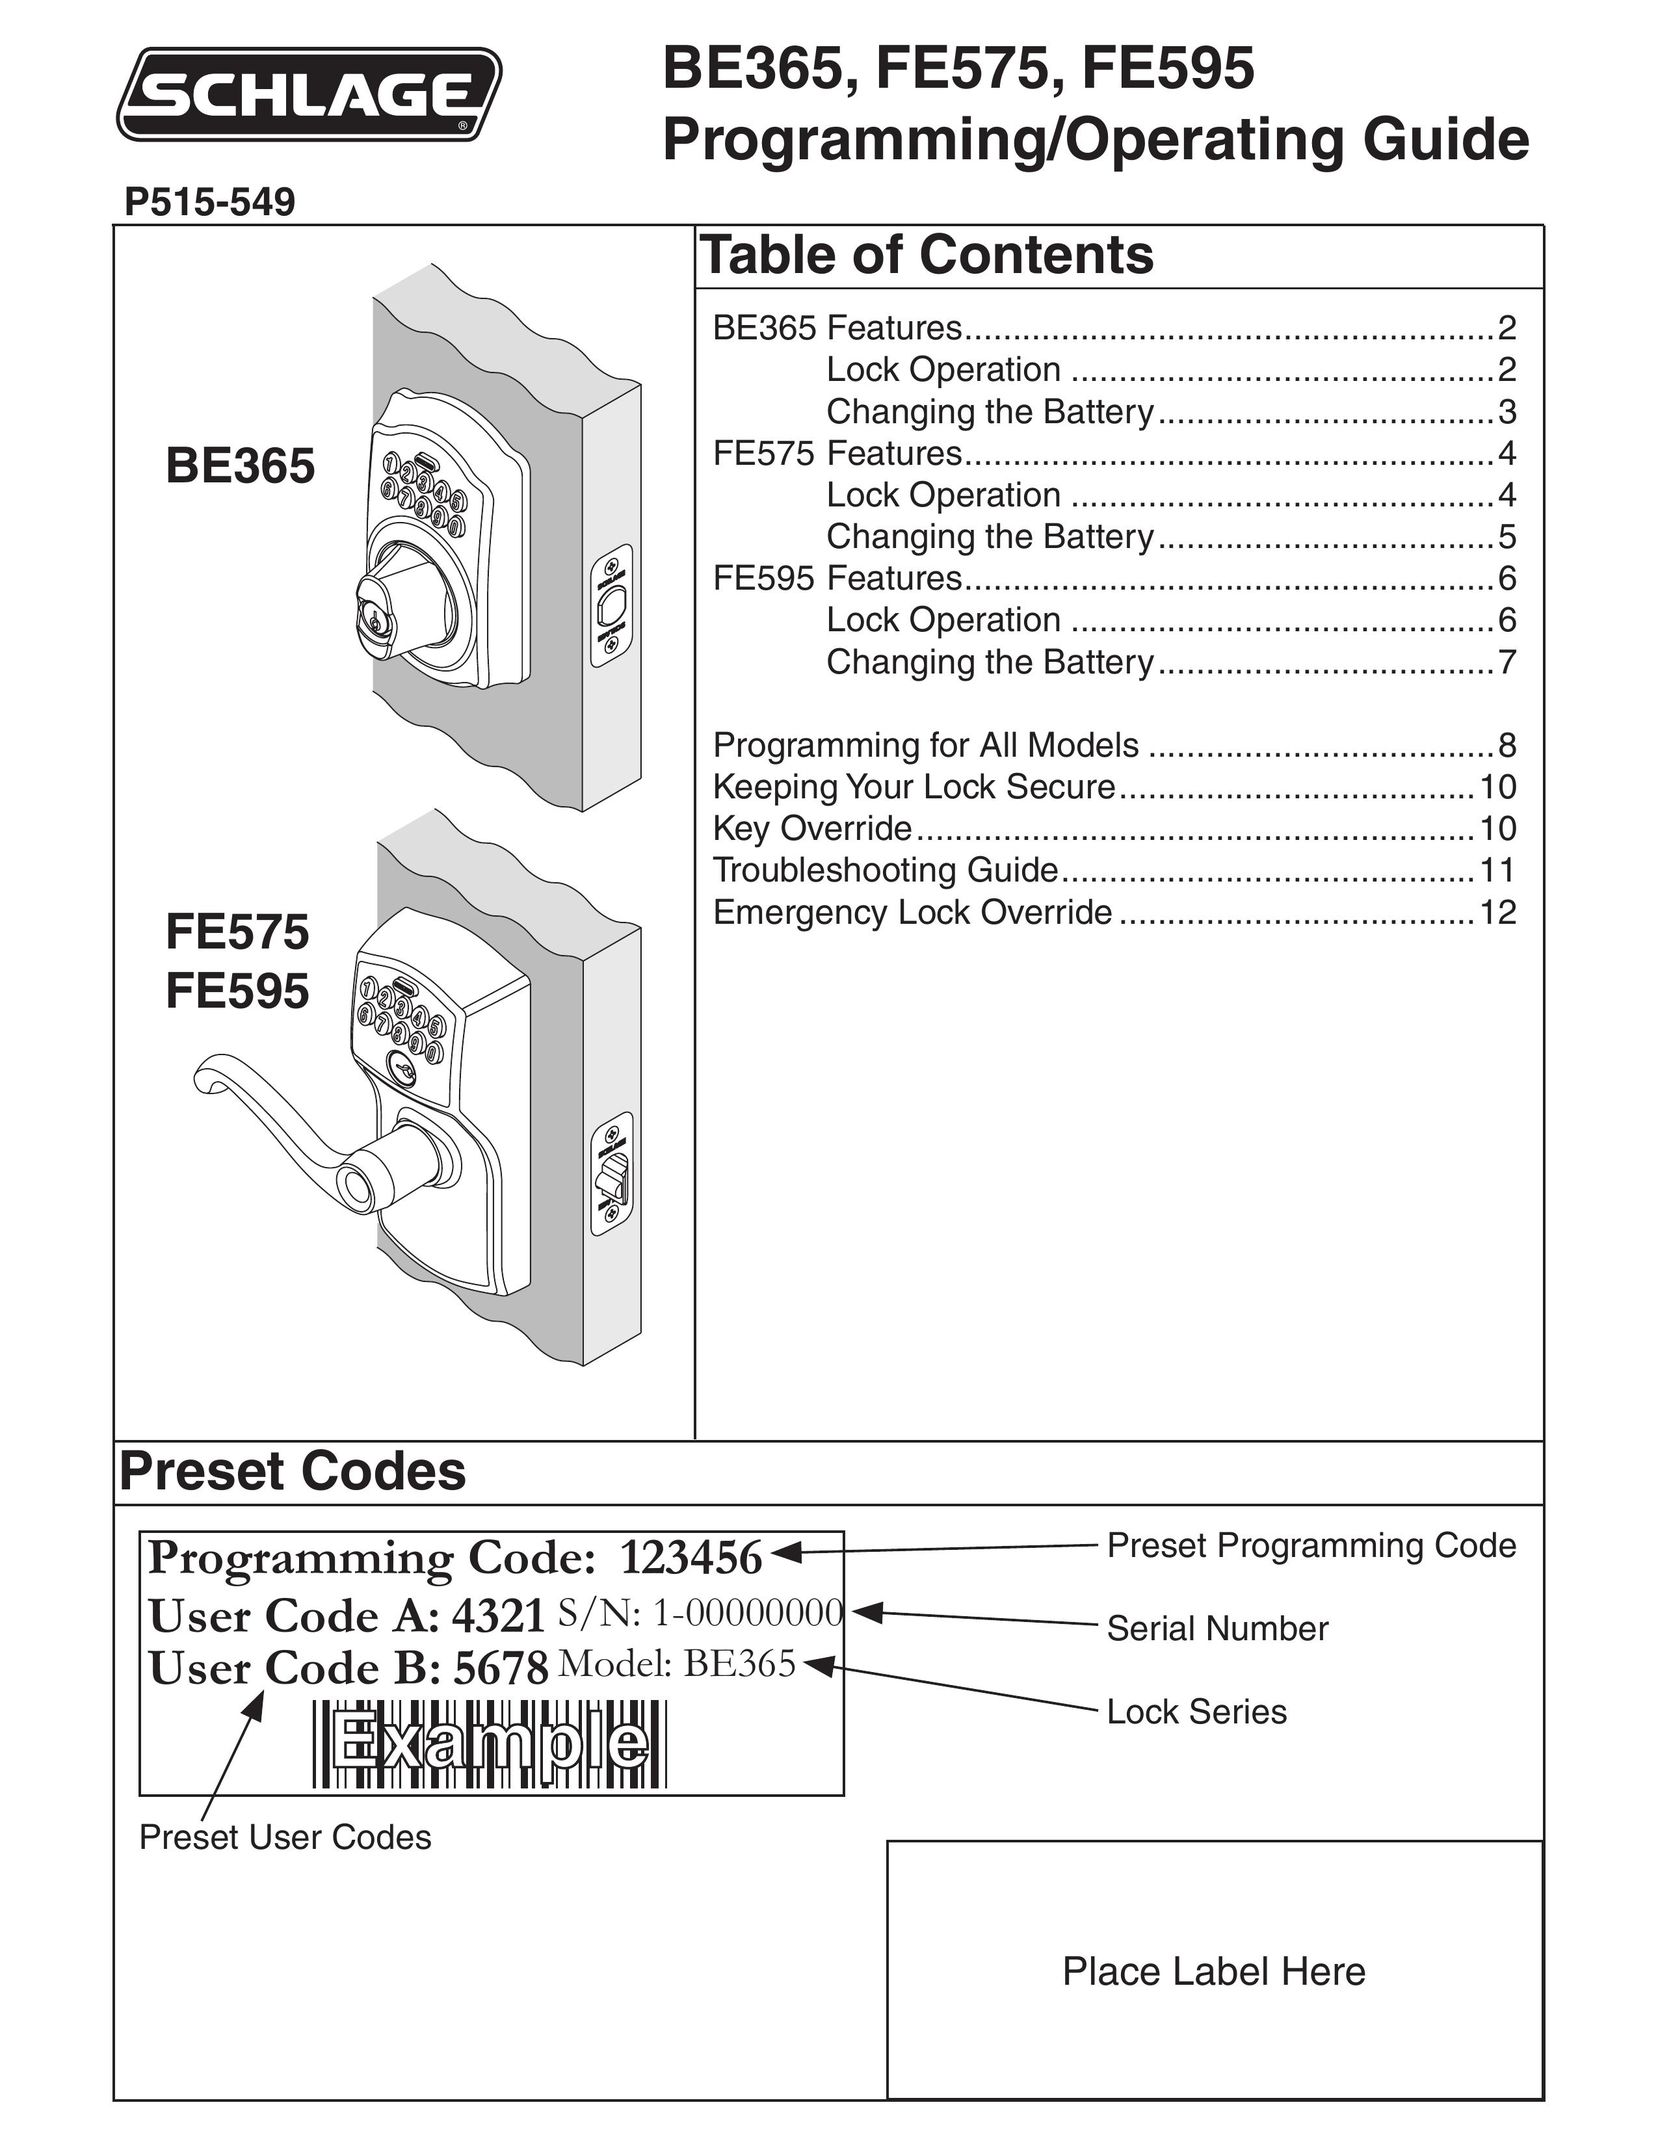 Schlage FE575 Pet Fence User Manual